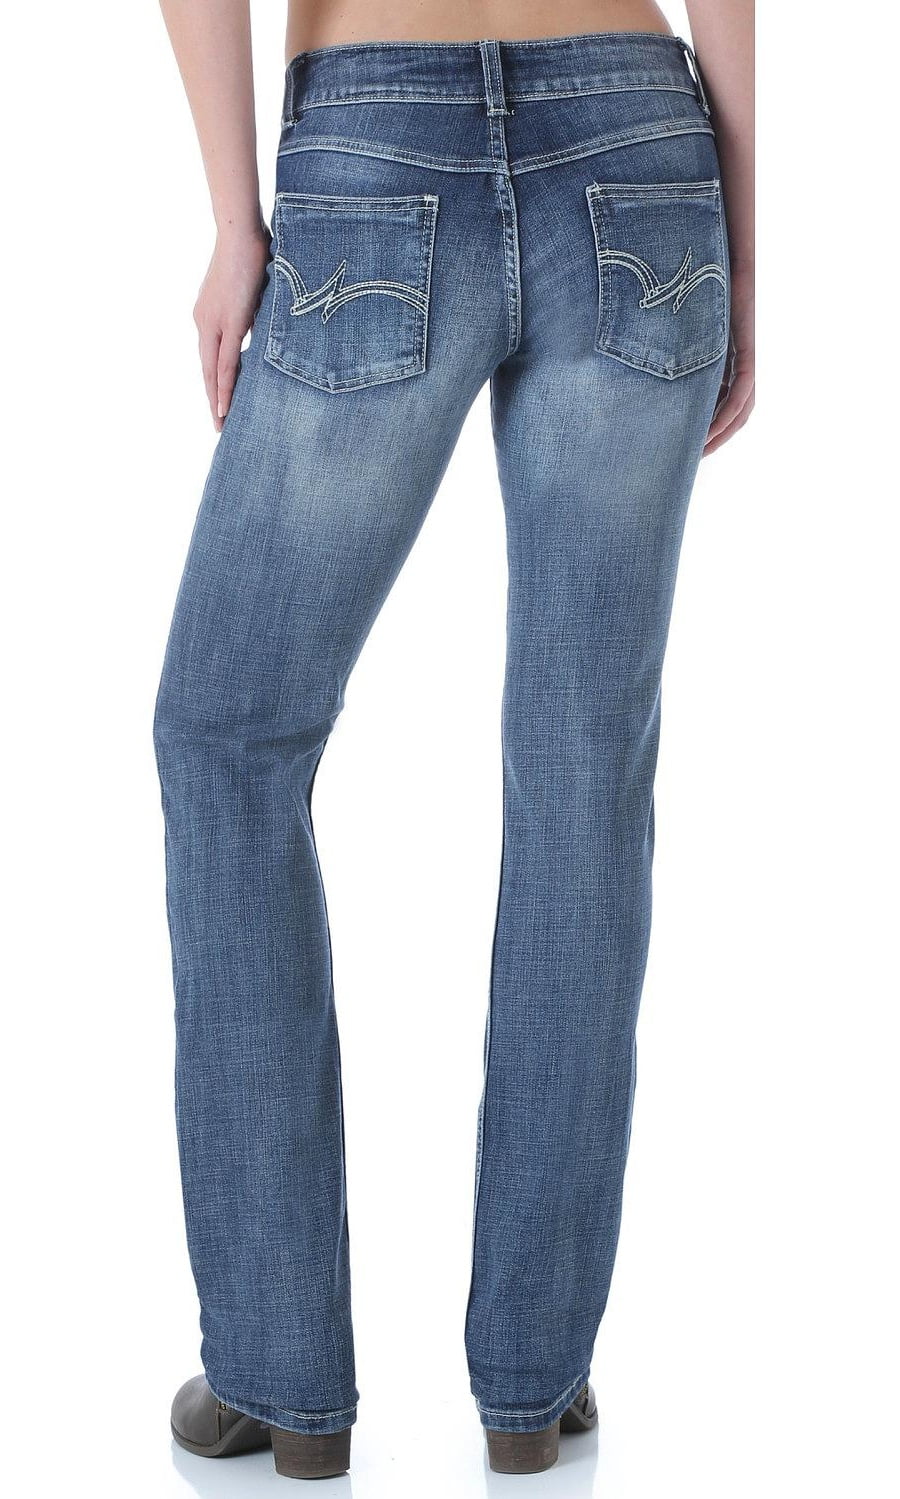 wrangler jeans wrw83rs